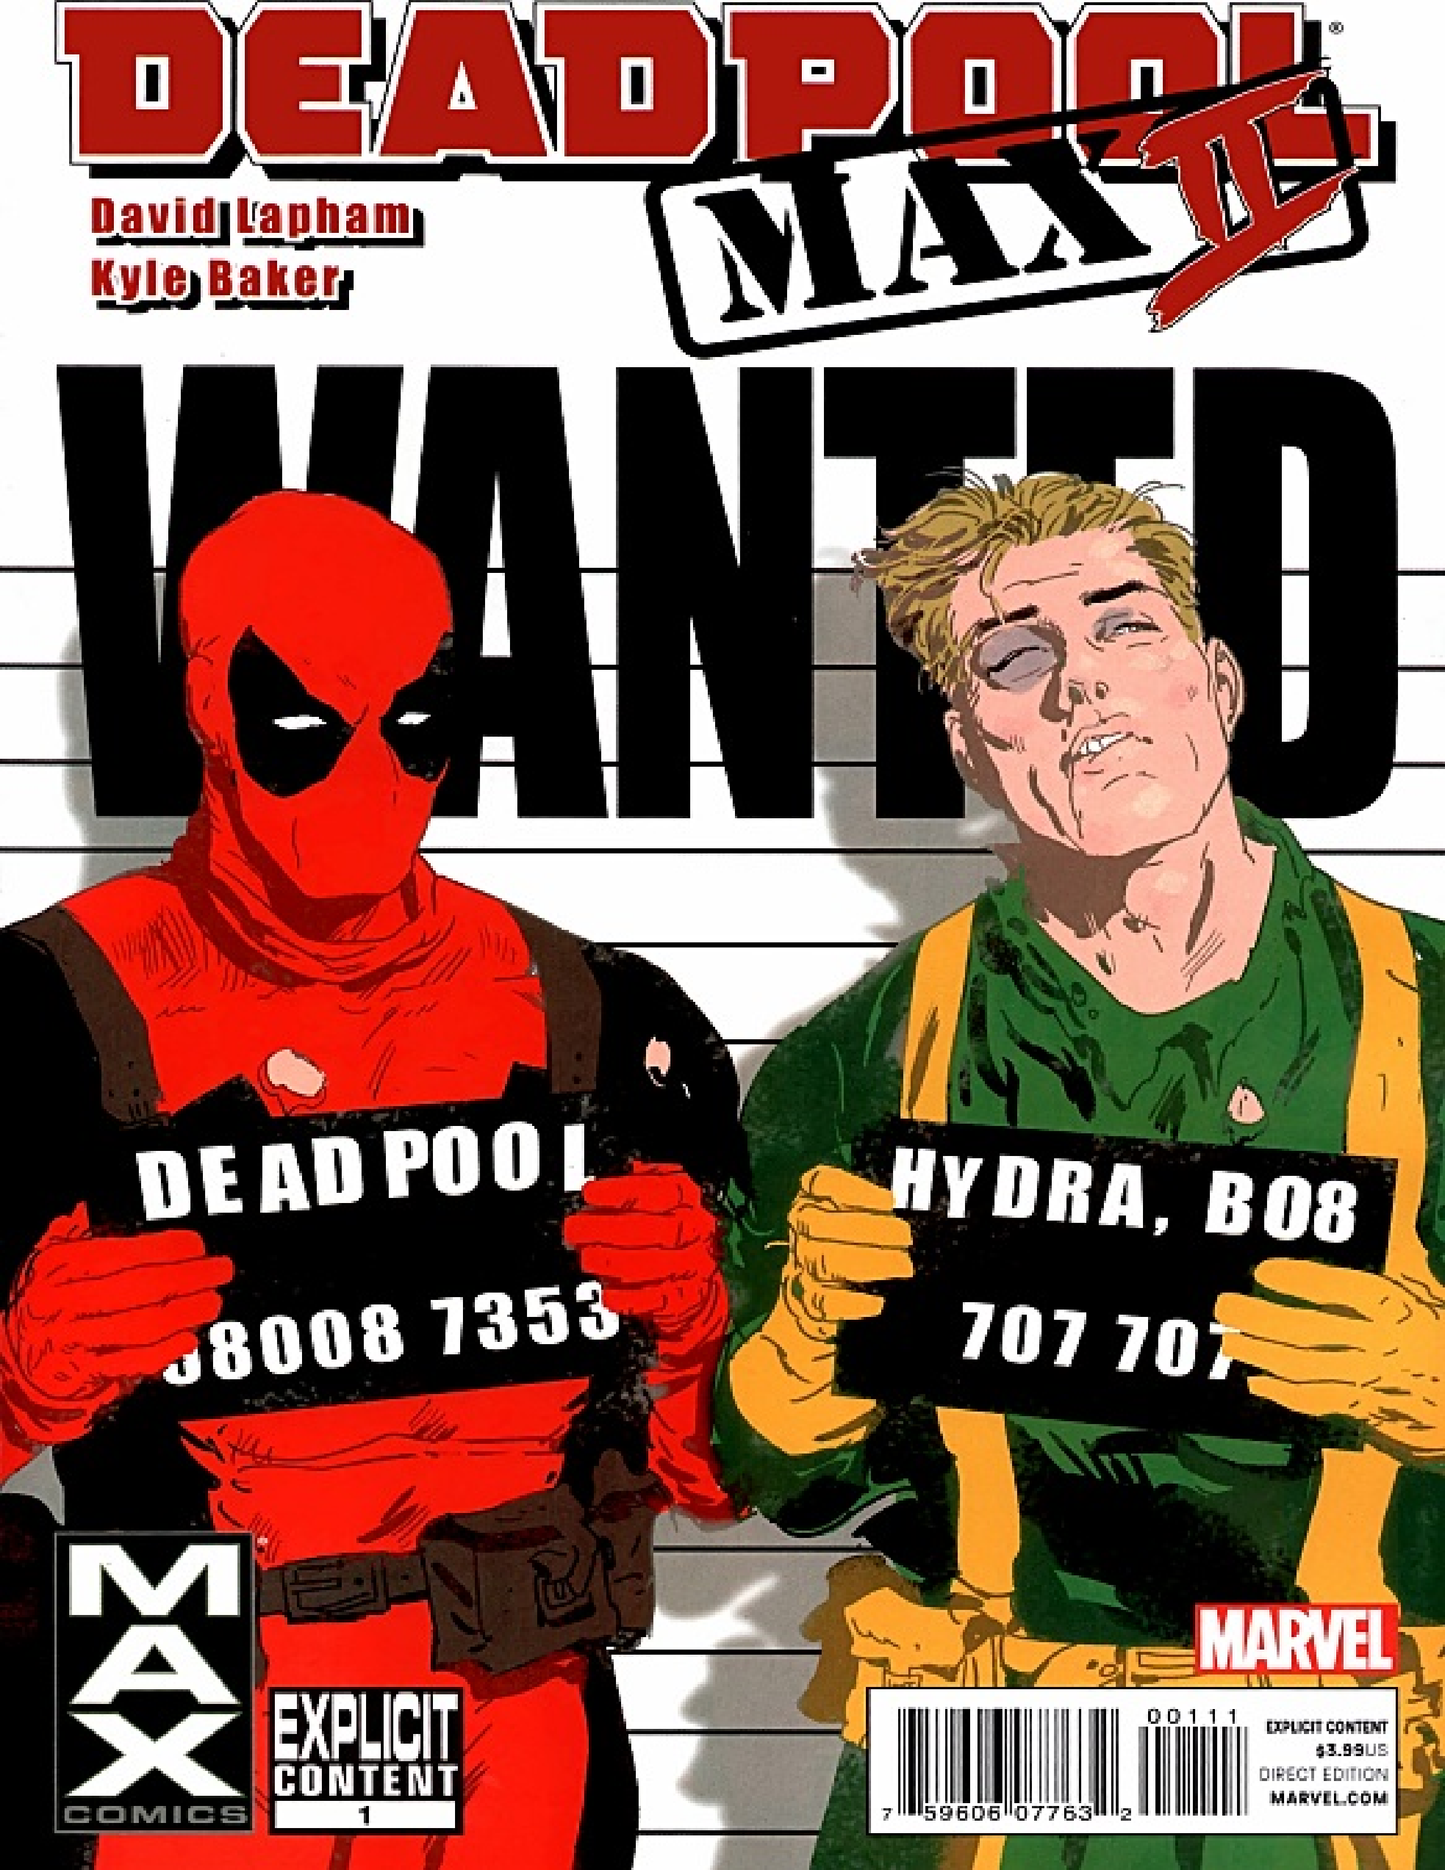 Deadpool MAX 2 (2012) | E-Comic Series